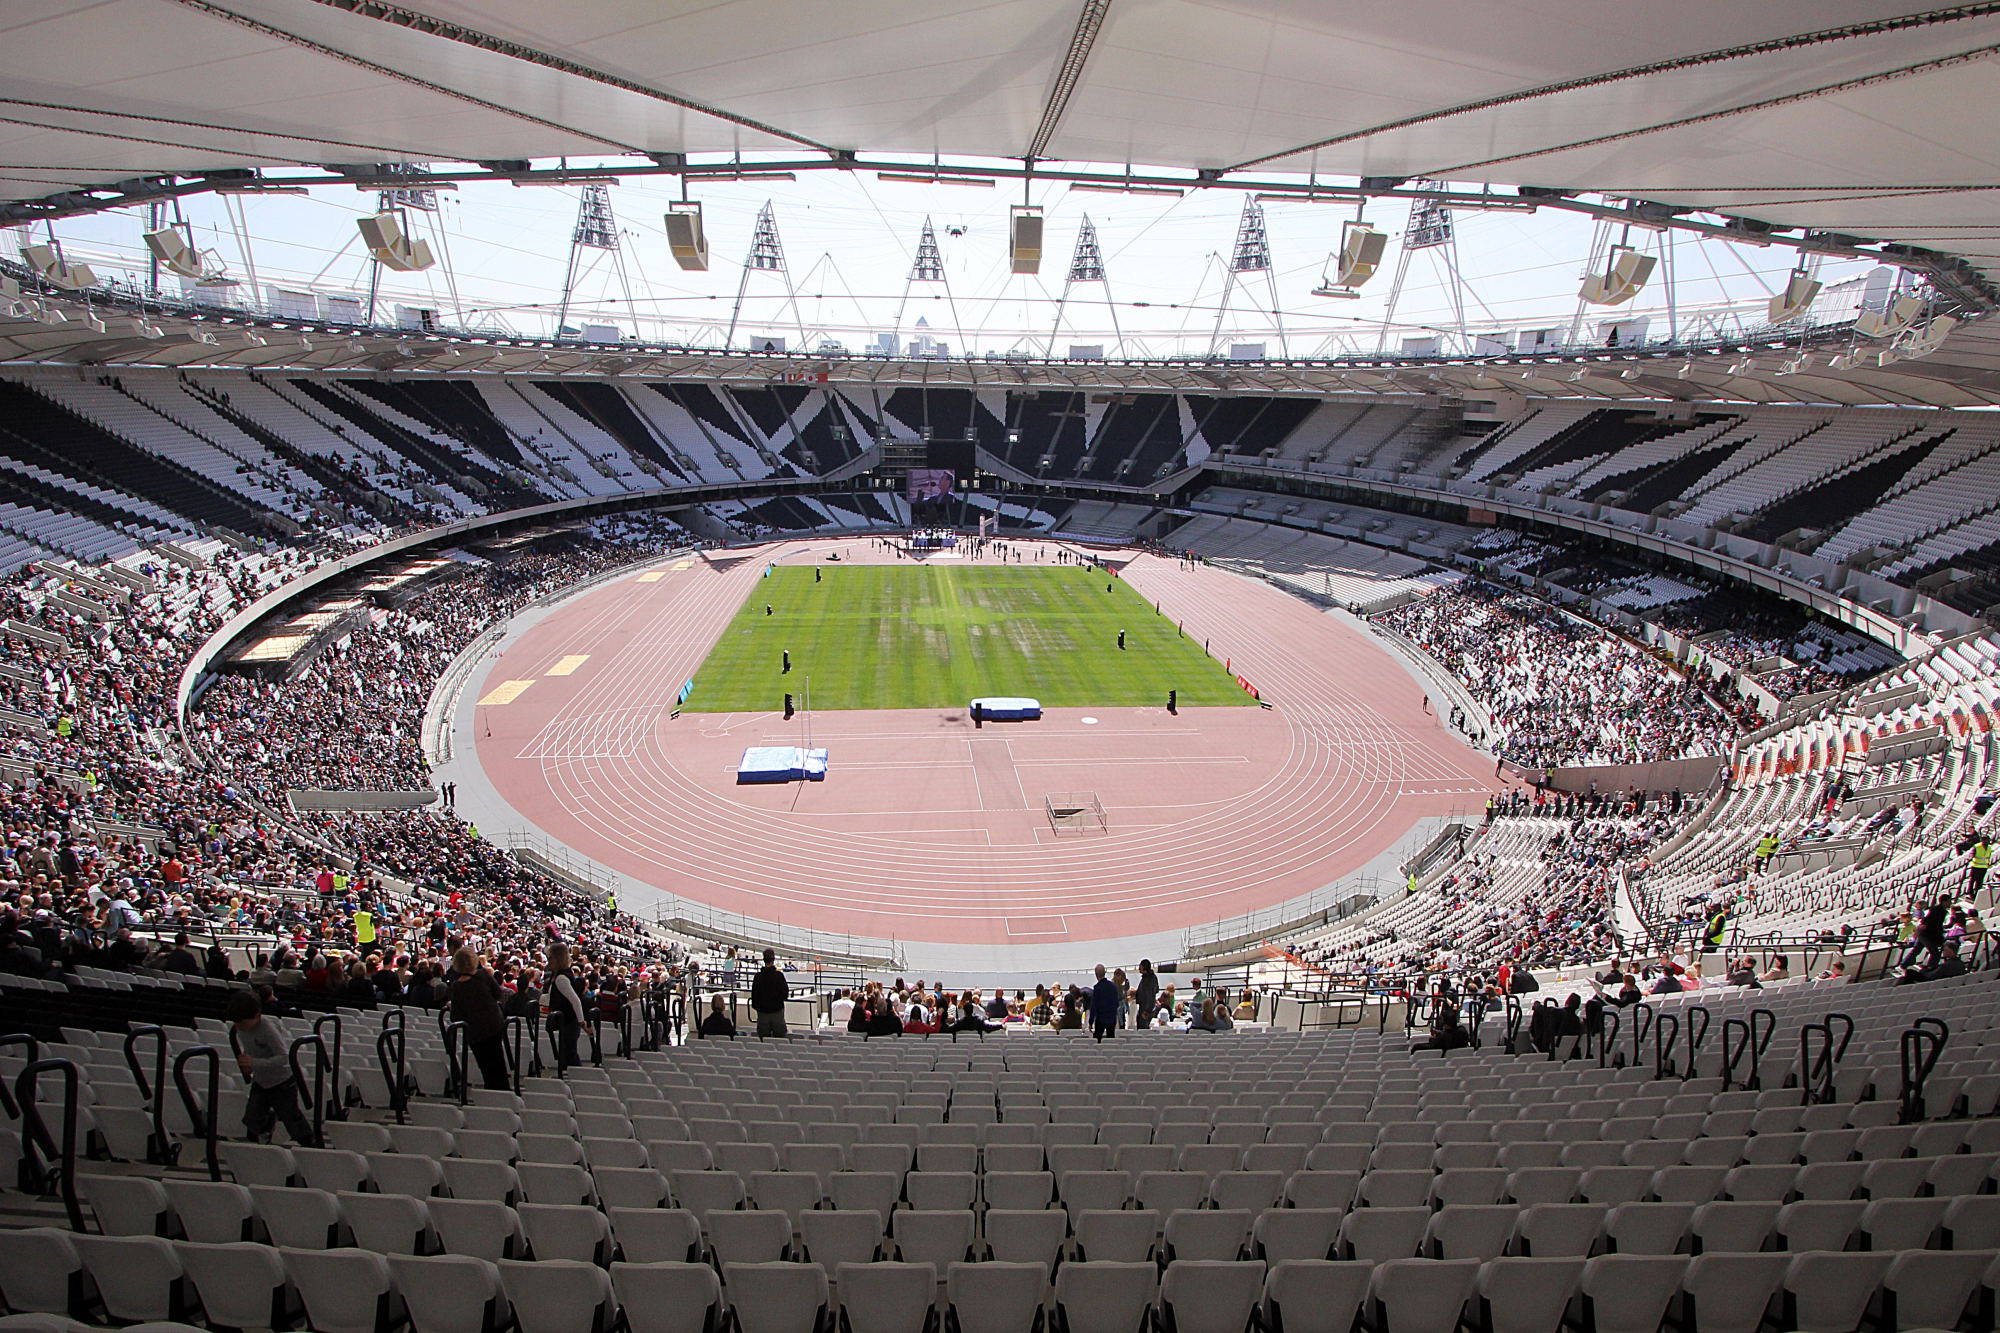 Olympic stadium. Стадион Лондон Стэдиум. Олимпийский стадион Лондон 2012. Олимпийский стадион (Лондон). Олимпийский стадион Англия.